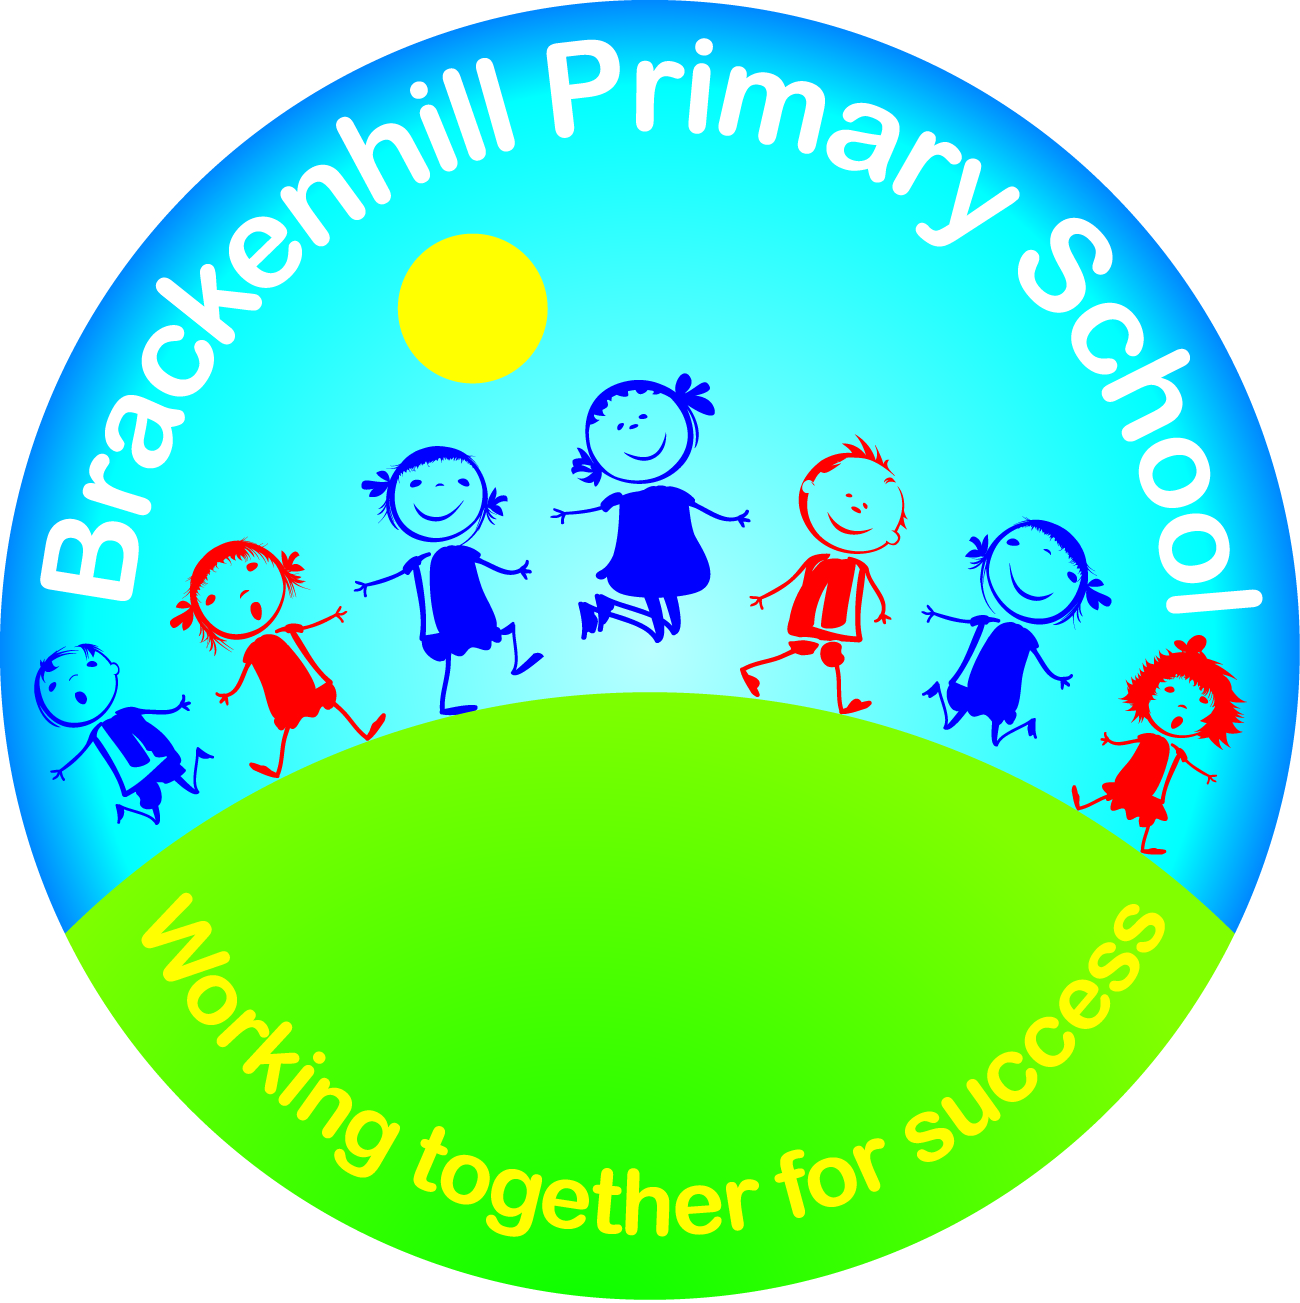 Brackenhill Primary School logo